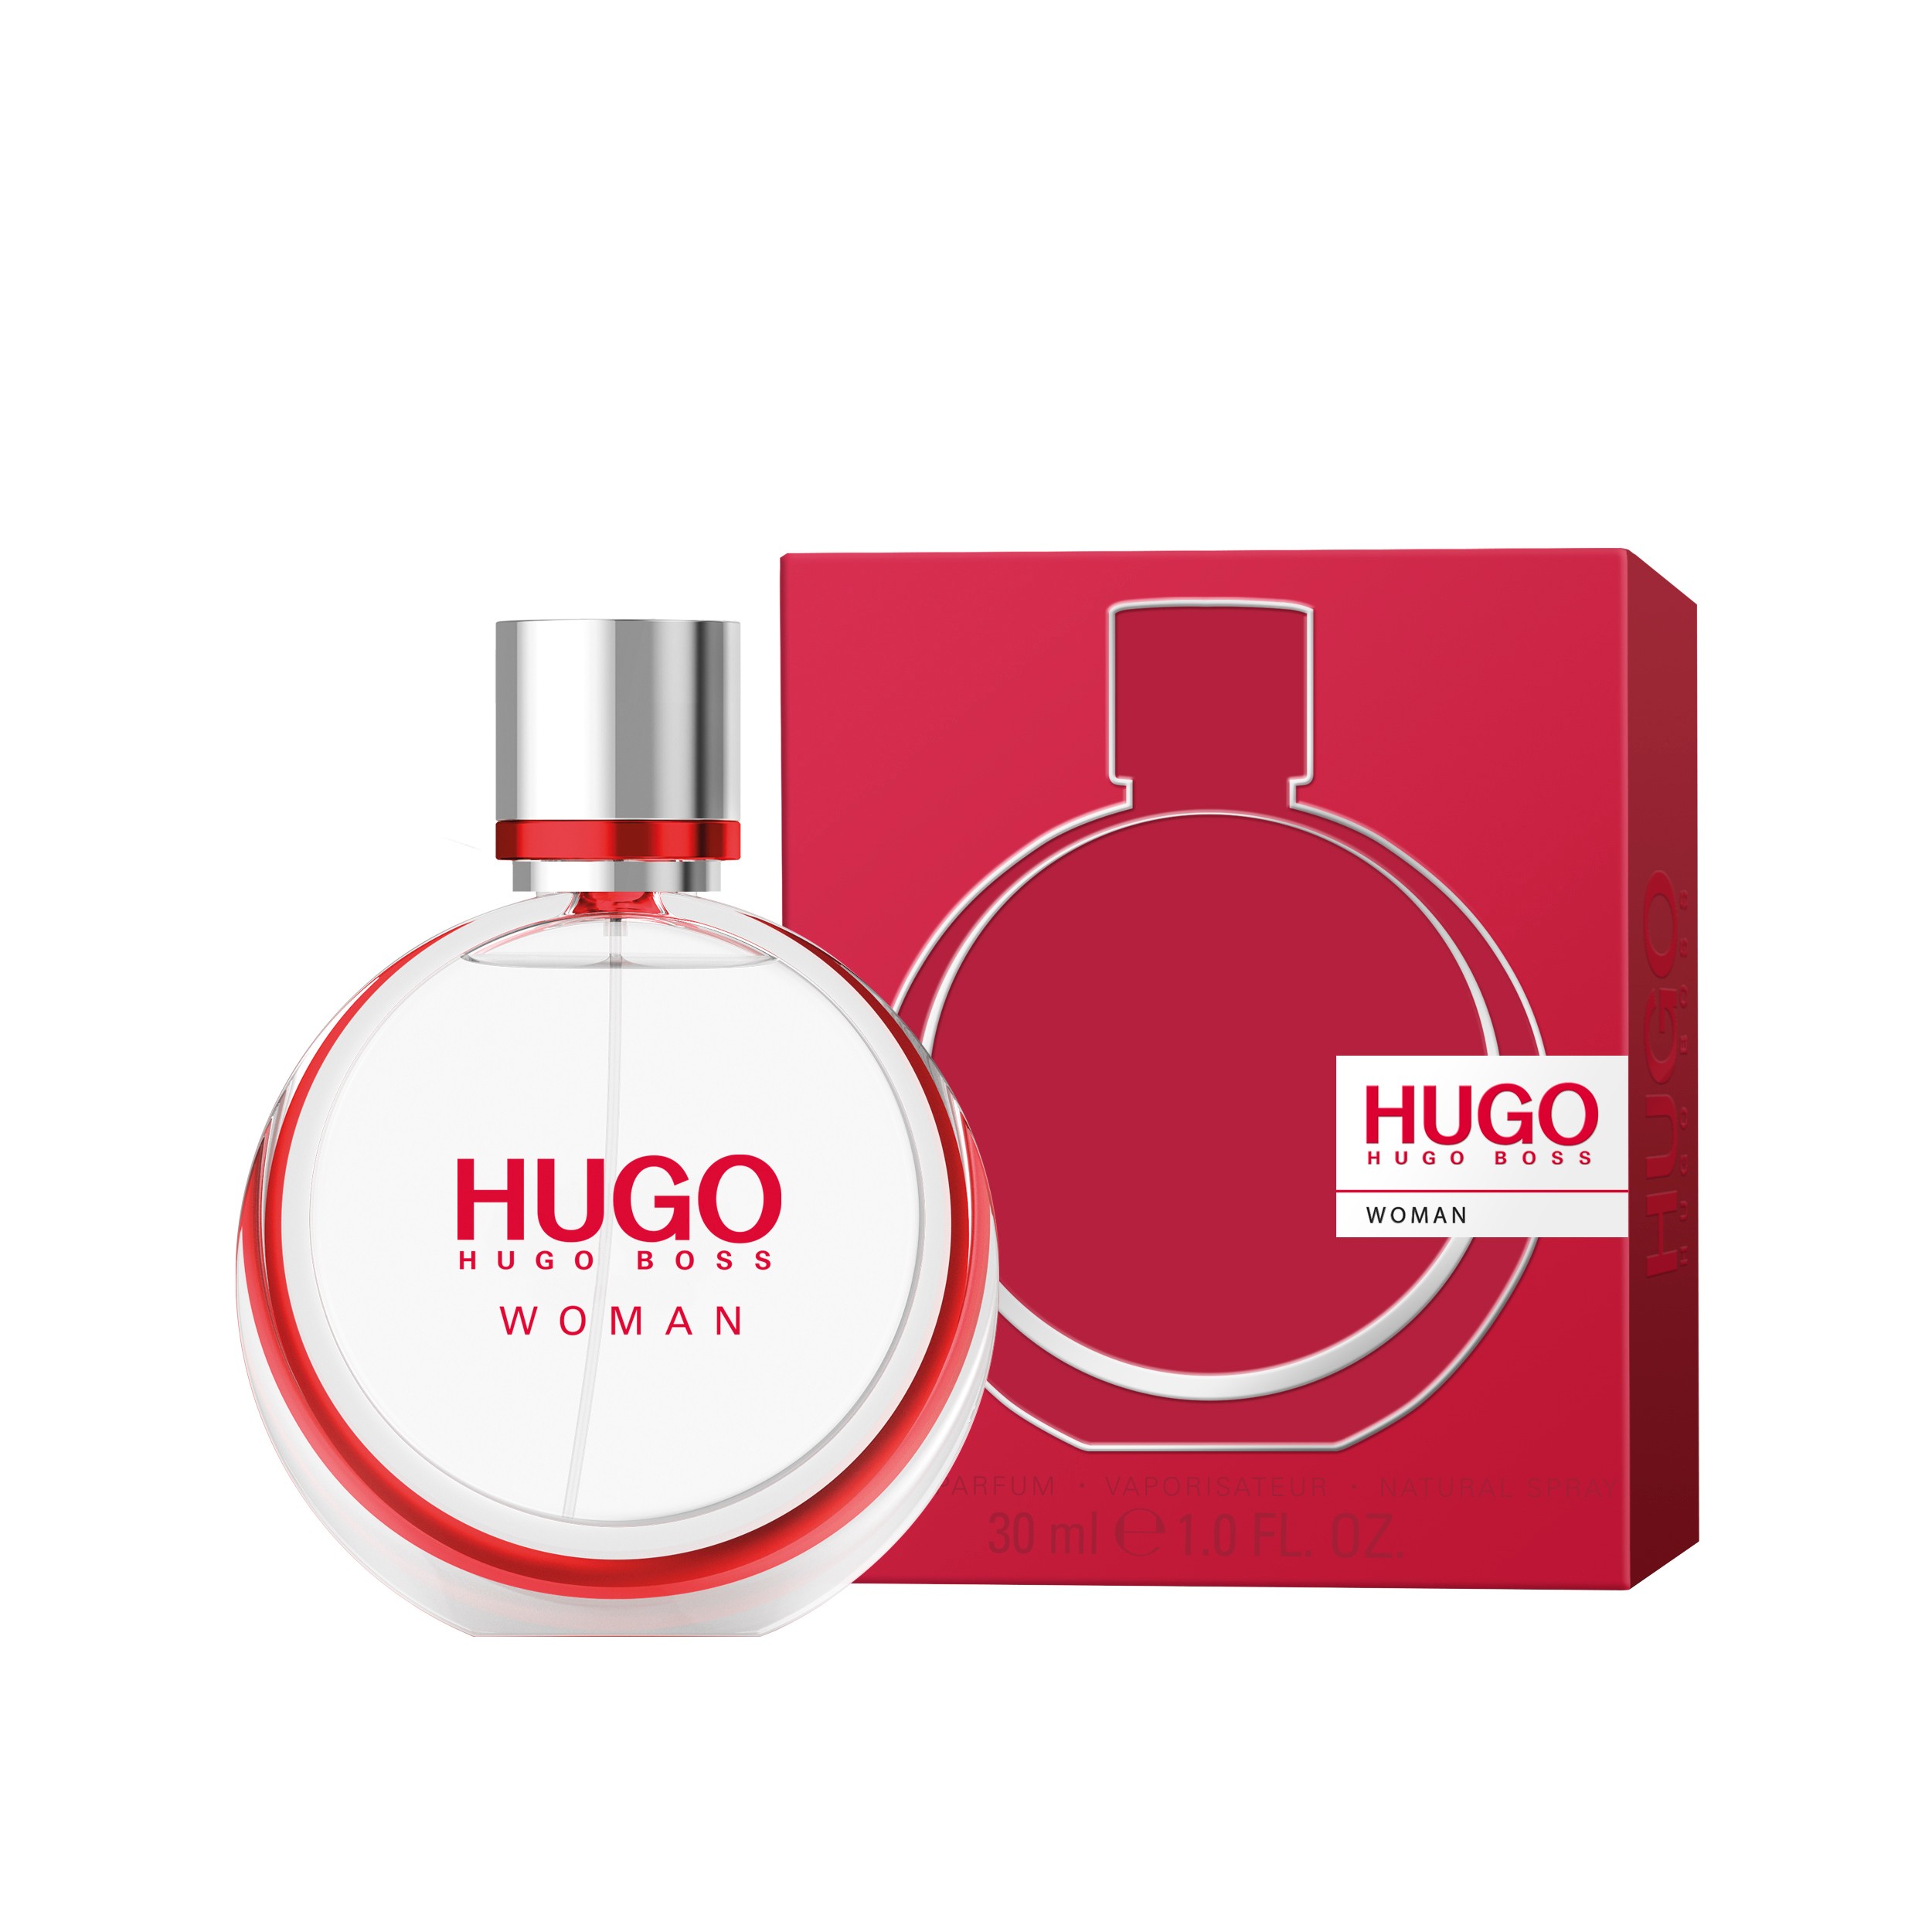 Hugo для женщин. Hugo Boss Hugo woman 30ml EDP /Ж/ (красный). Hugo Boss Lady 30ml EDP. Hugo Boss Hugo woman Eau de Parfum. Hugo Boss Boss woman EDP 90ml.